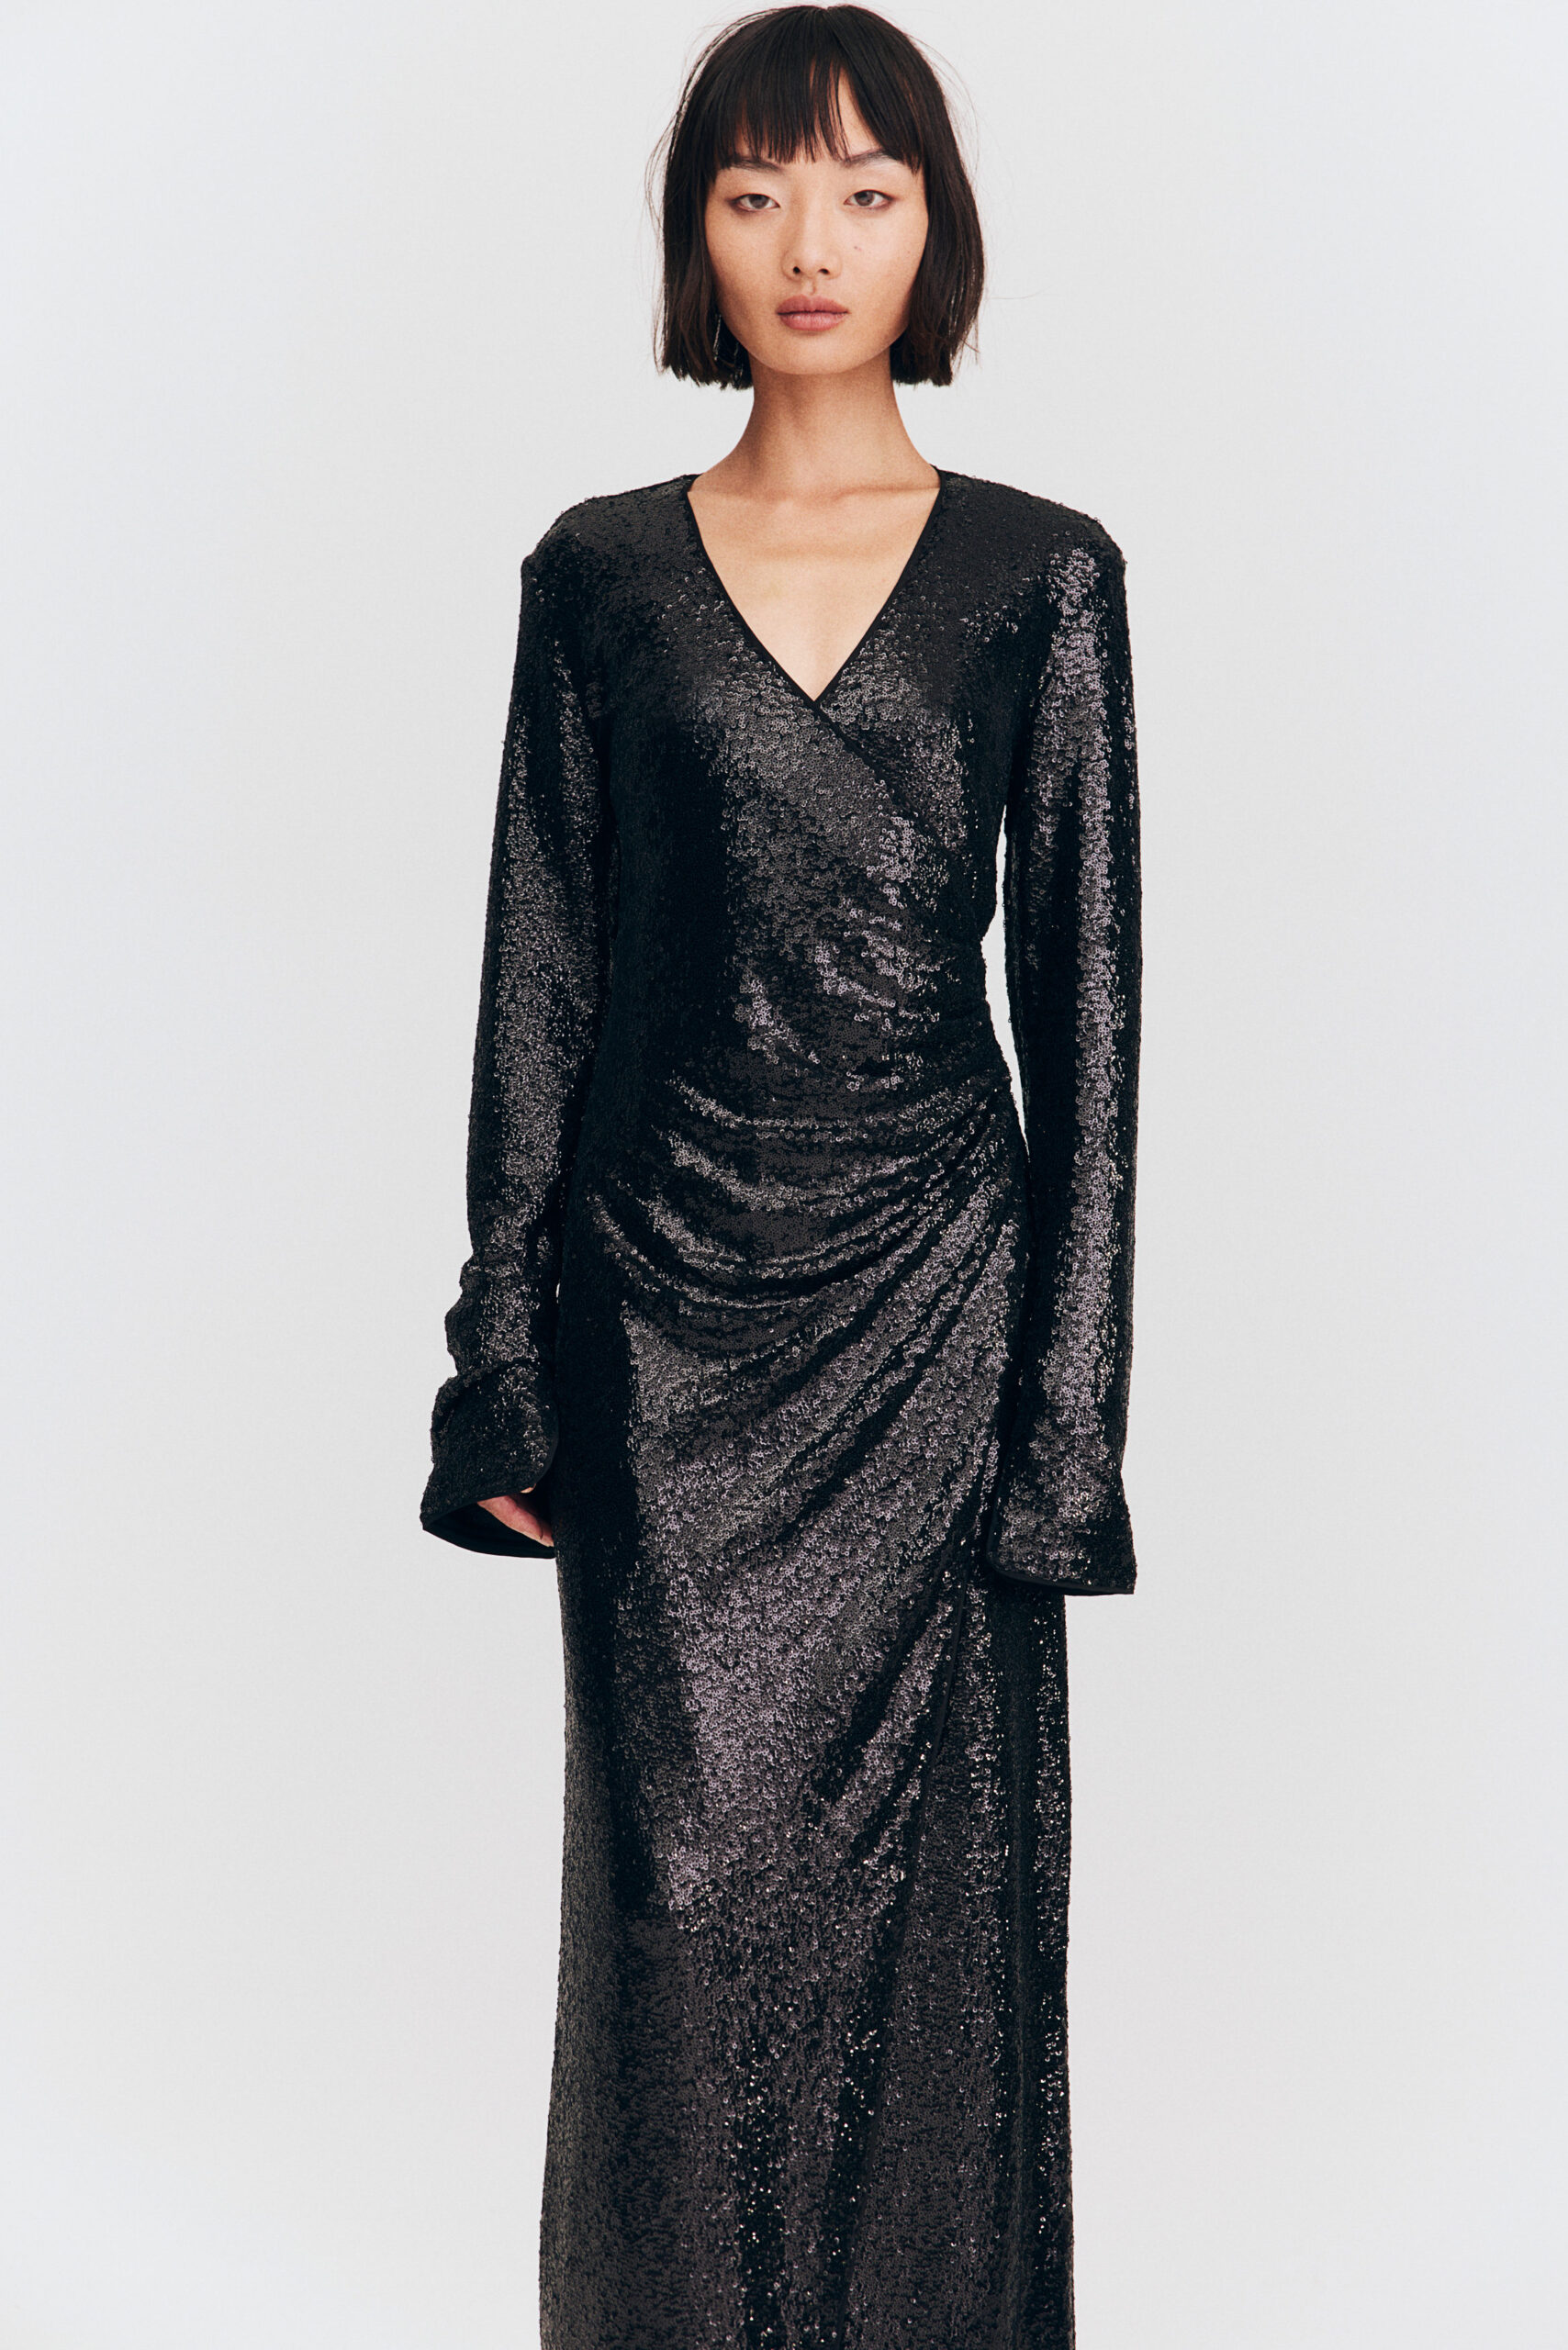 model wearing long black sparkly dress